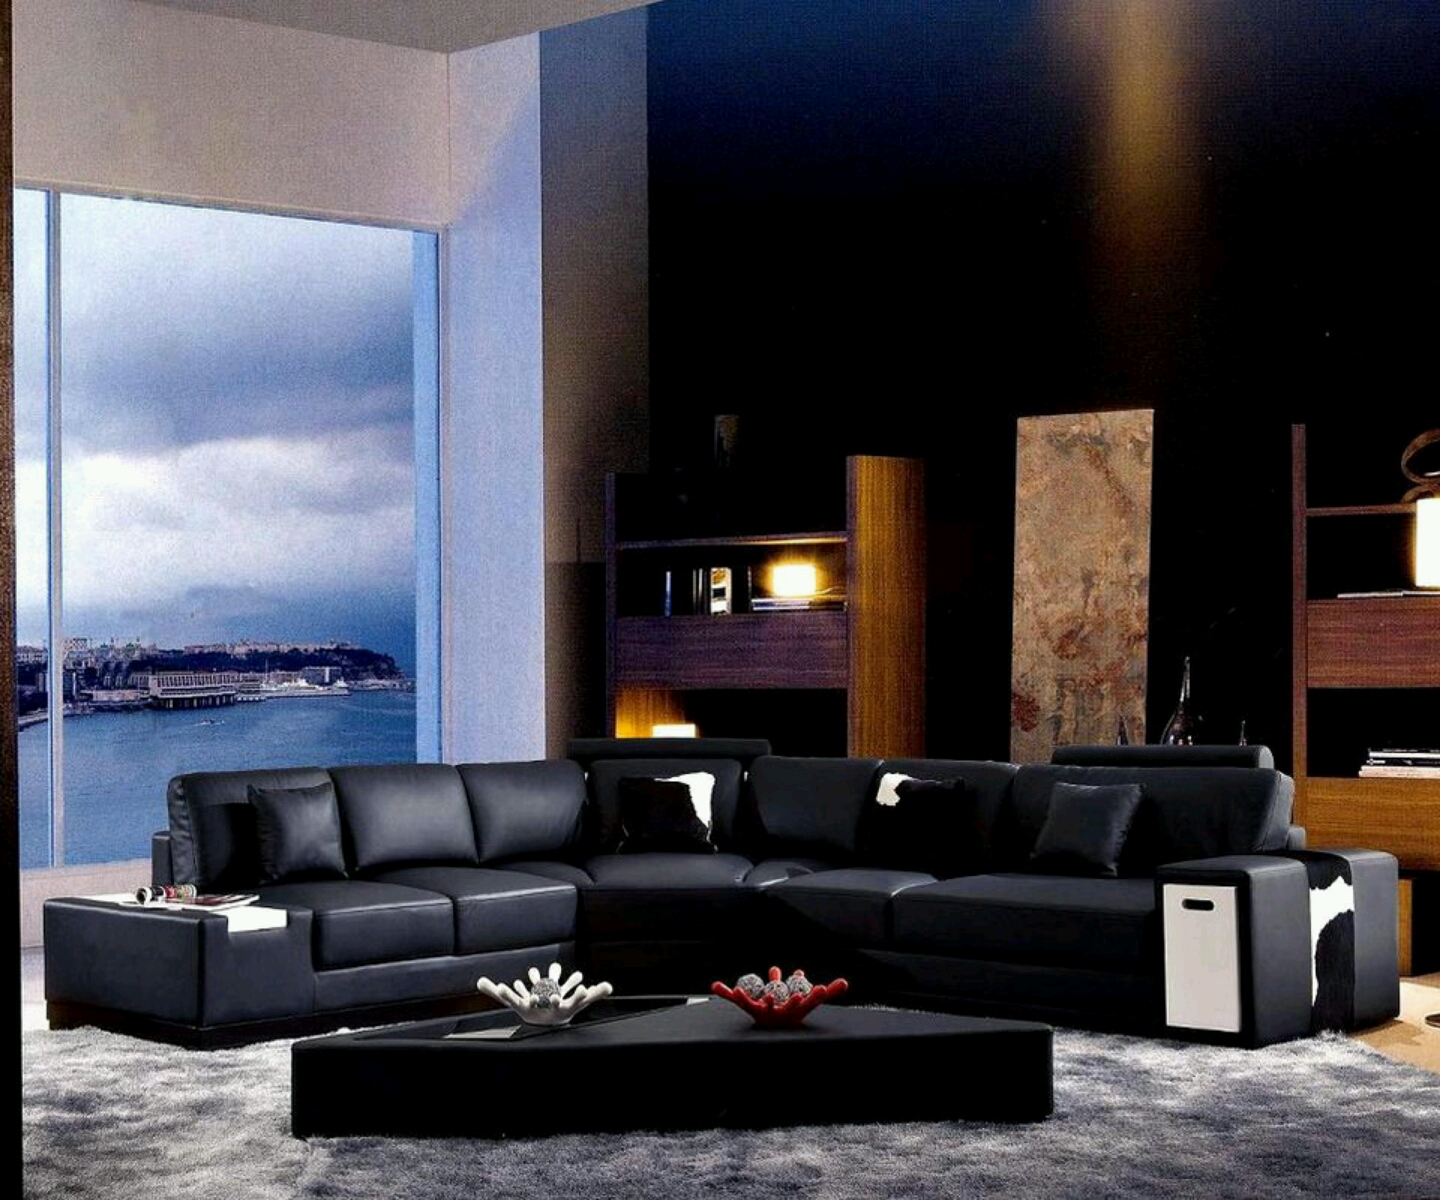  designs latest.: Luxury living rooms interior modern designs ideas